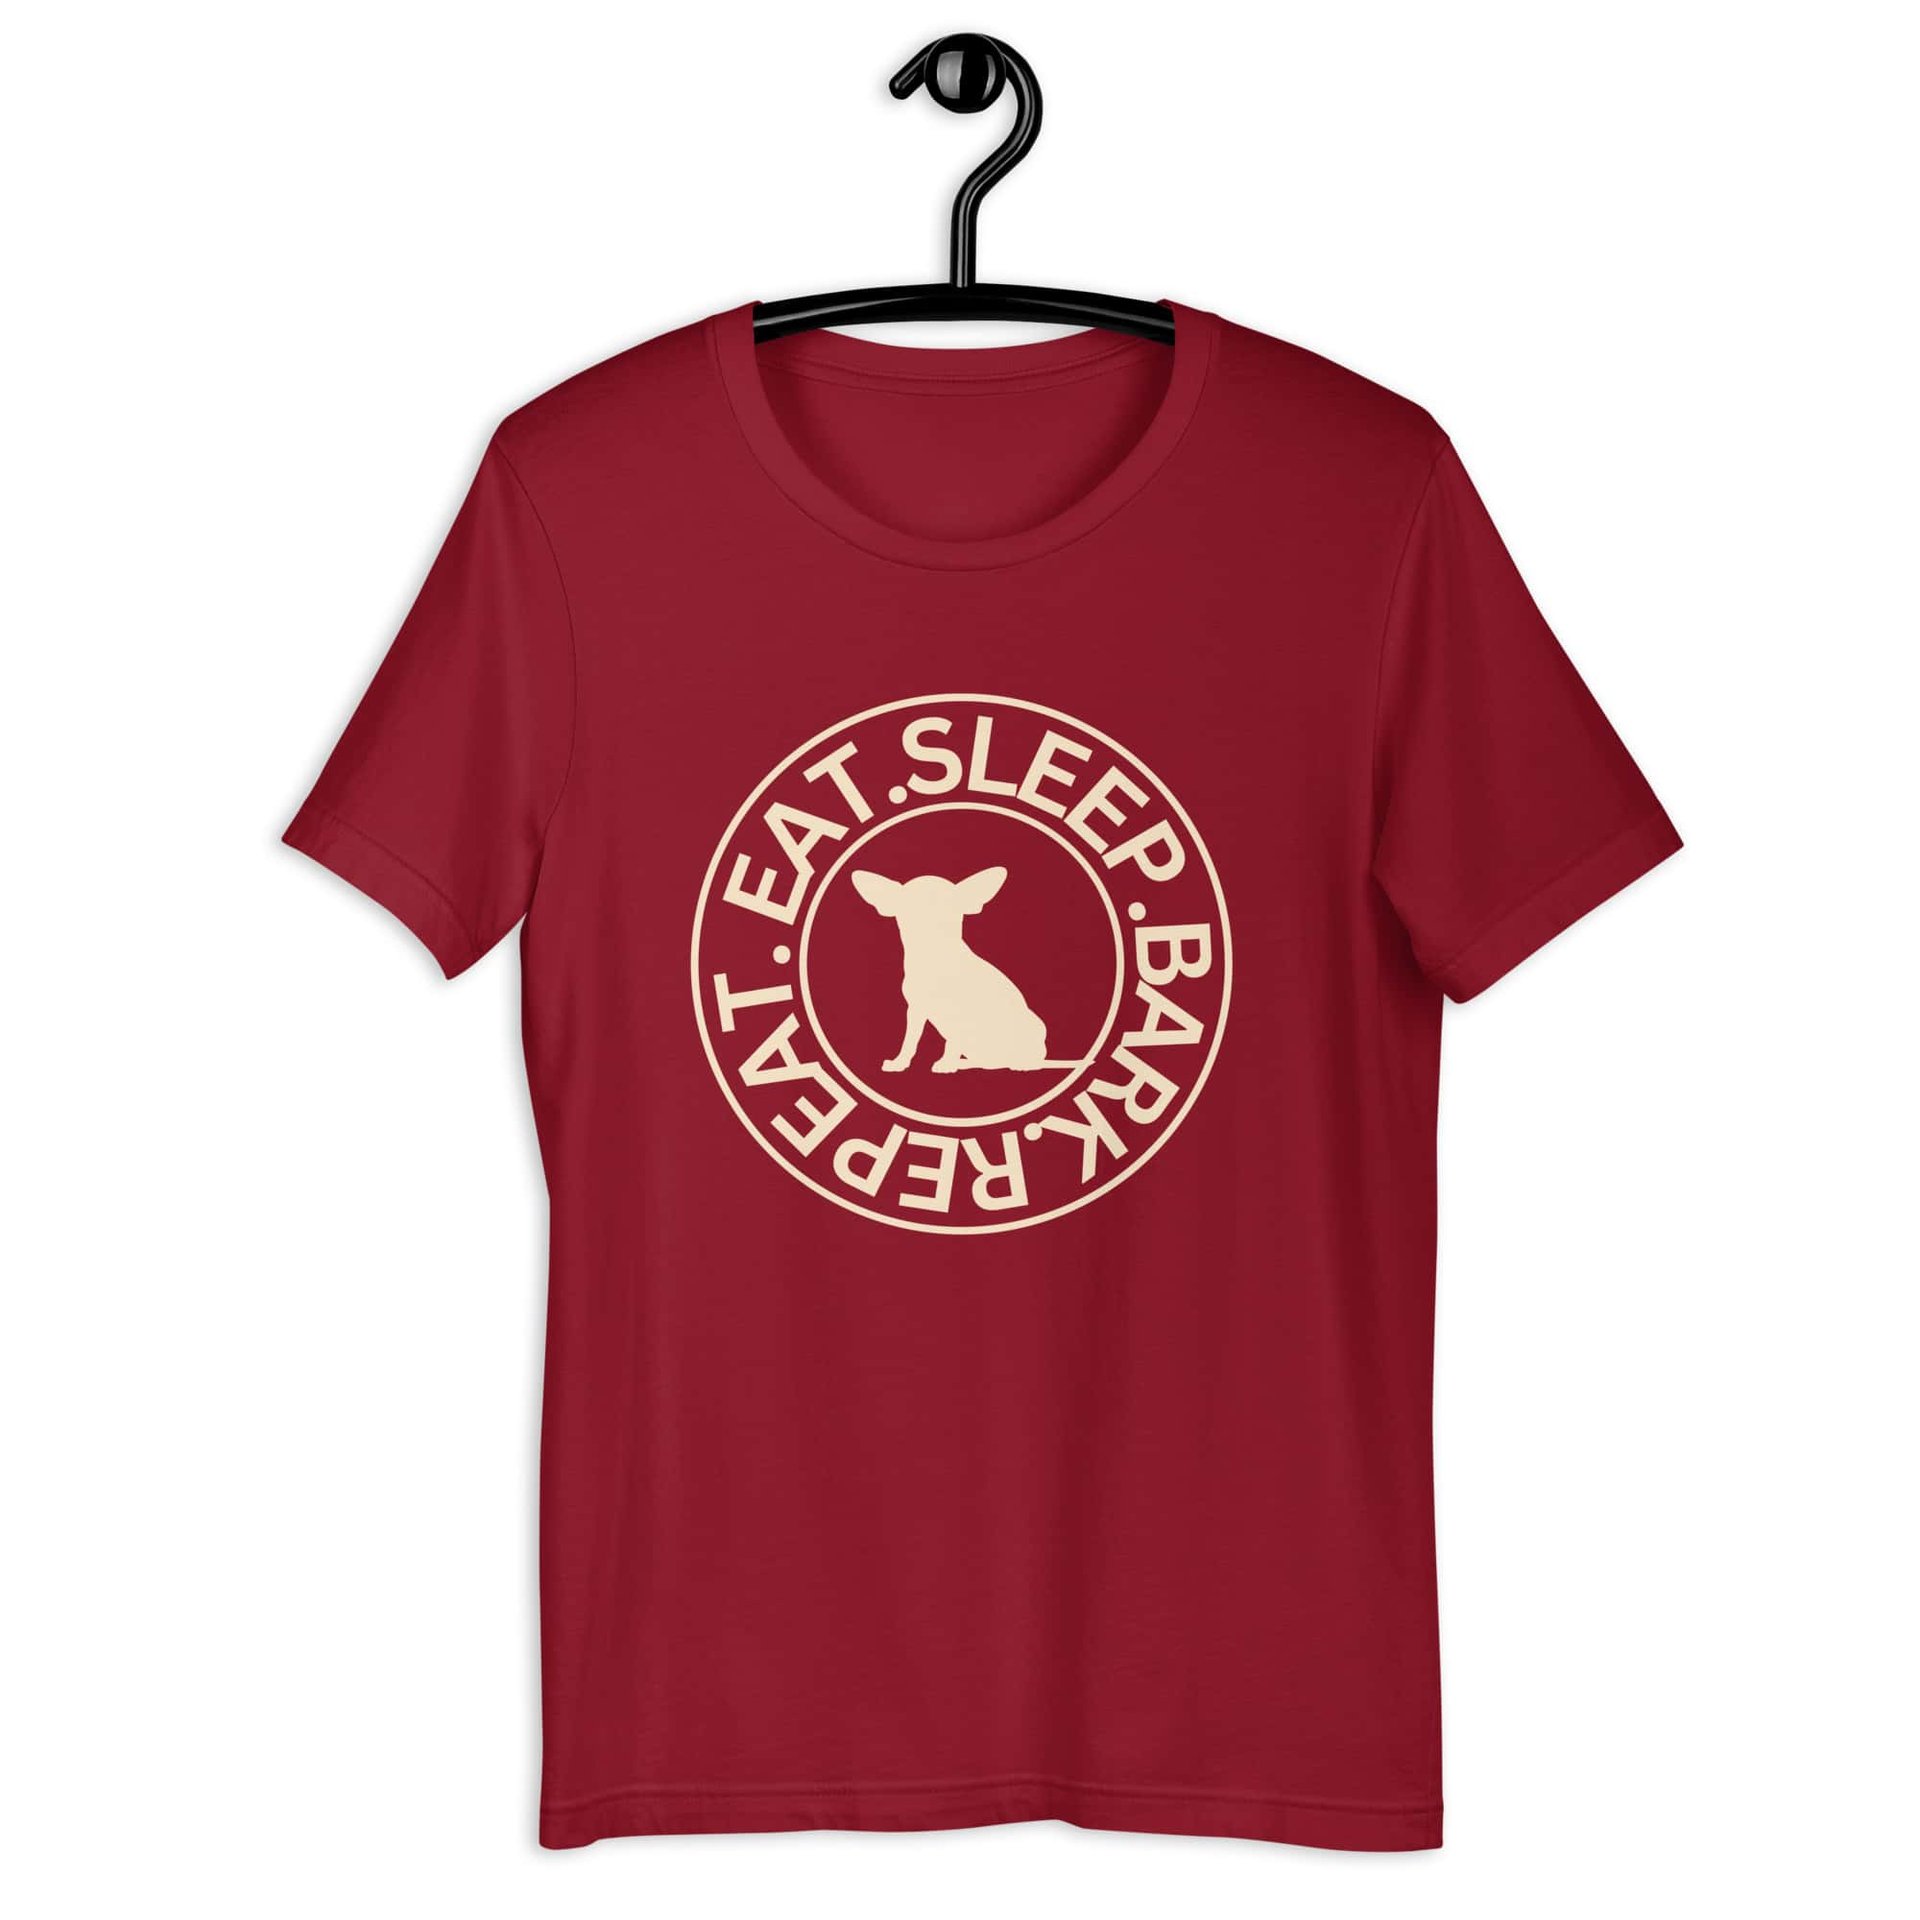 Eat Sleep Bark Repeat Chihuahua Unisex T-Shirt. Cardinal